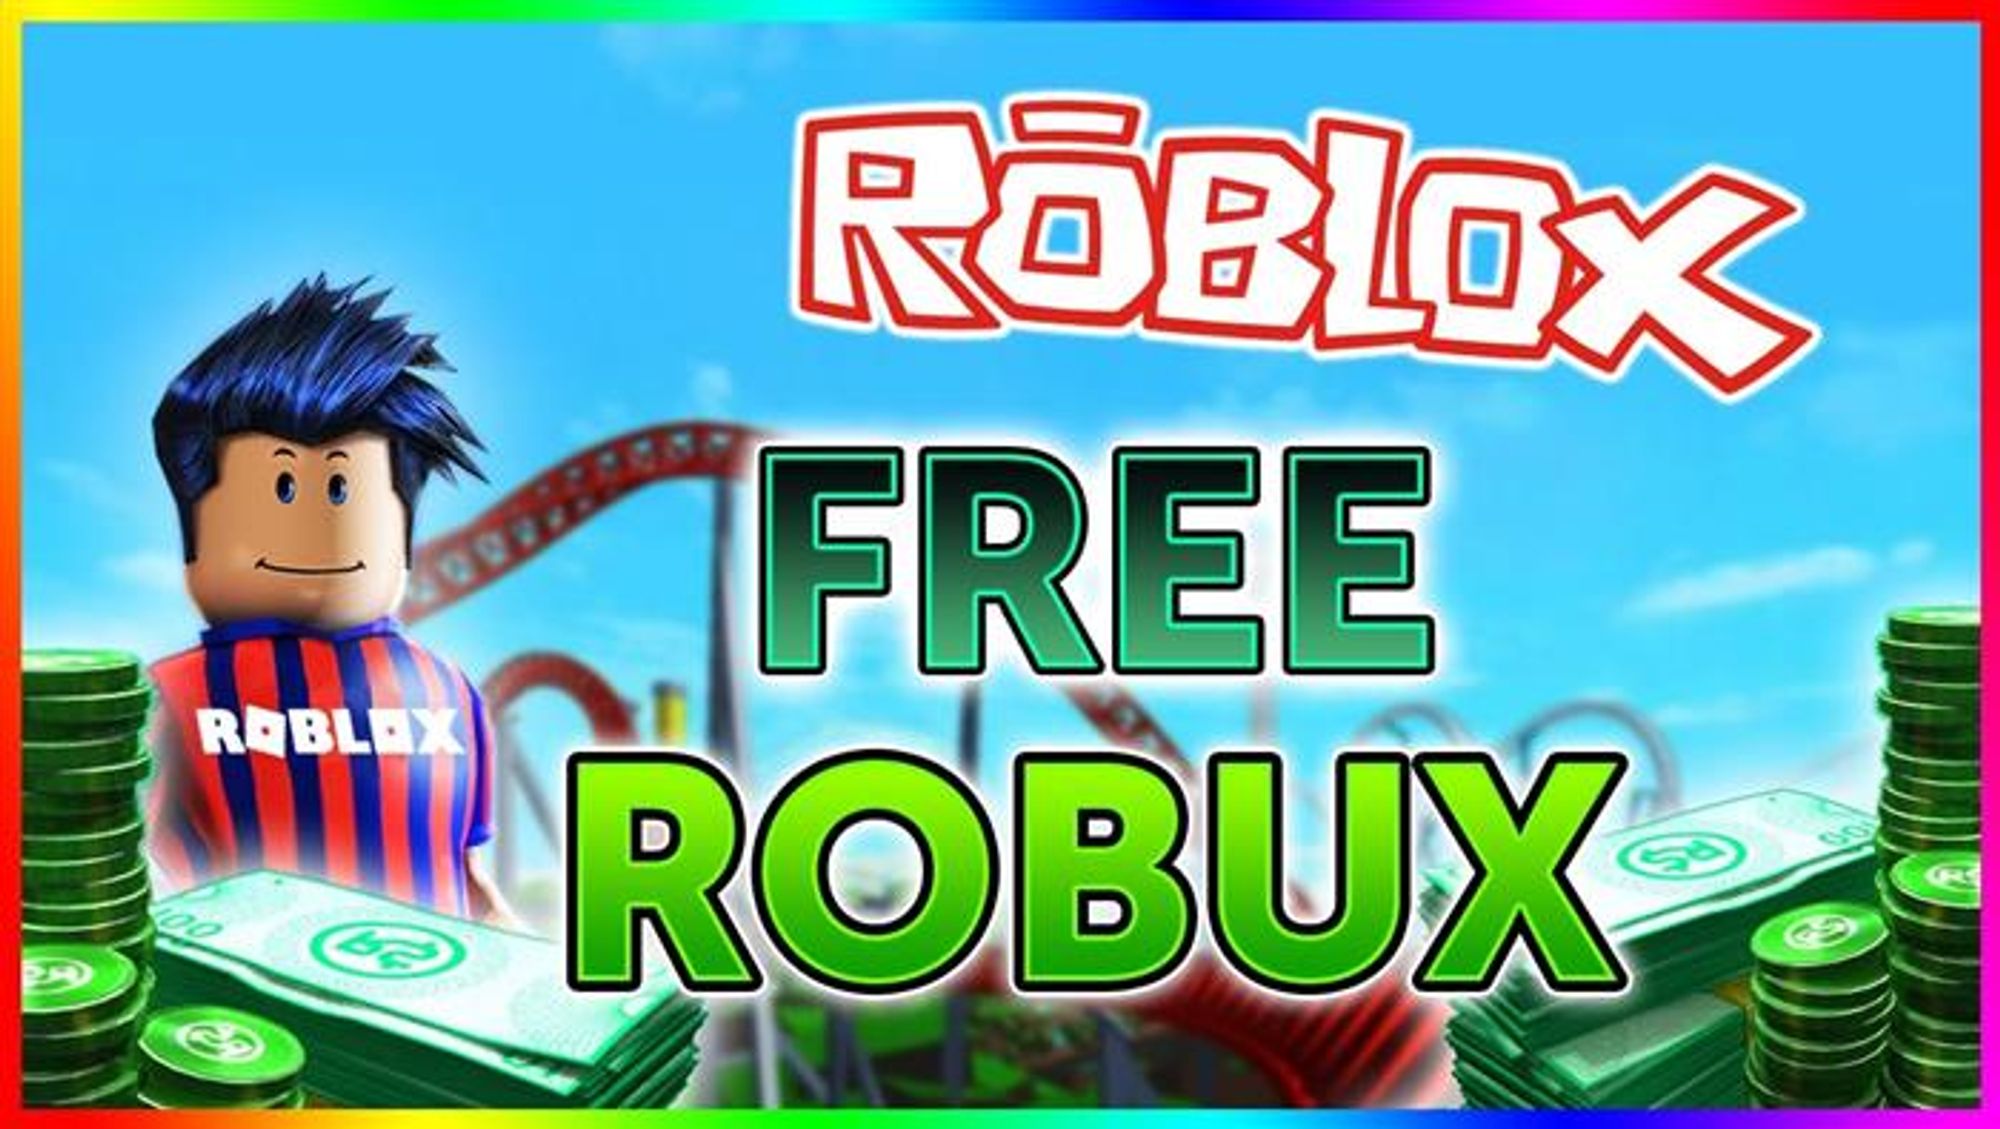 How To Get Free Robux - roblox fnac robux gratis 2018 generador